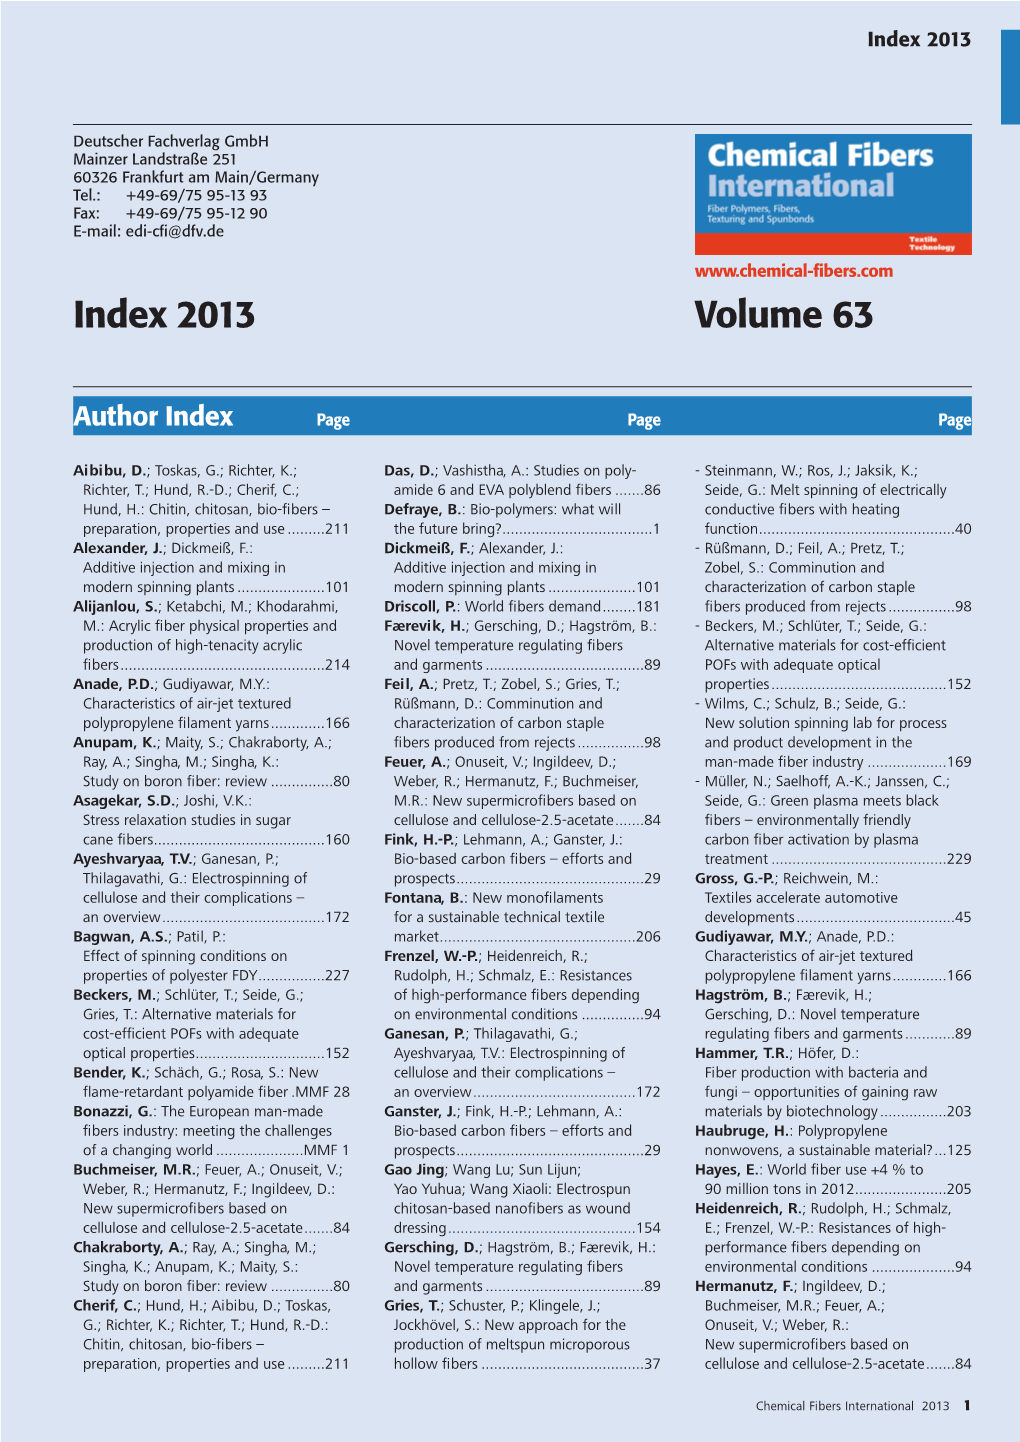 CFI-Index 2013 Jahresregister